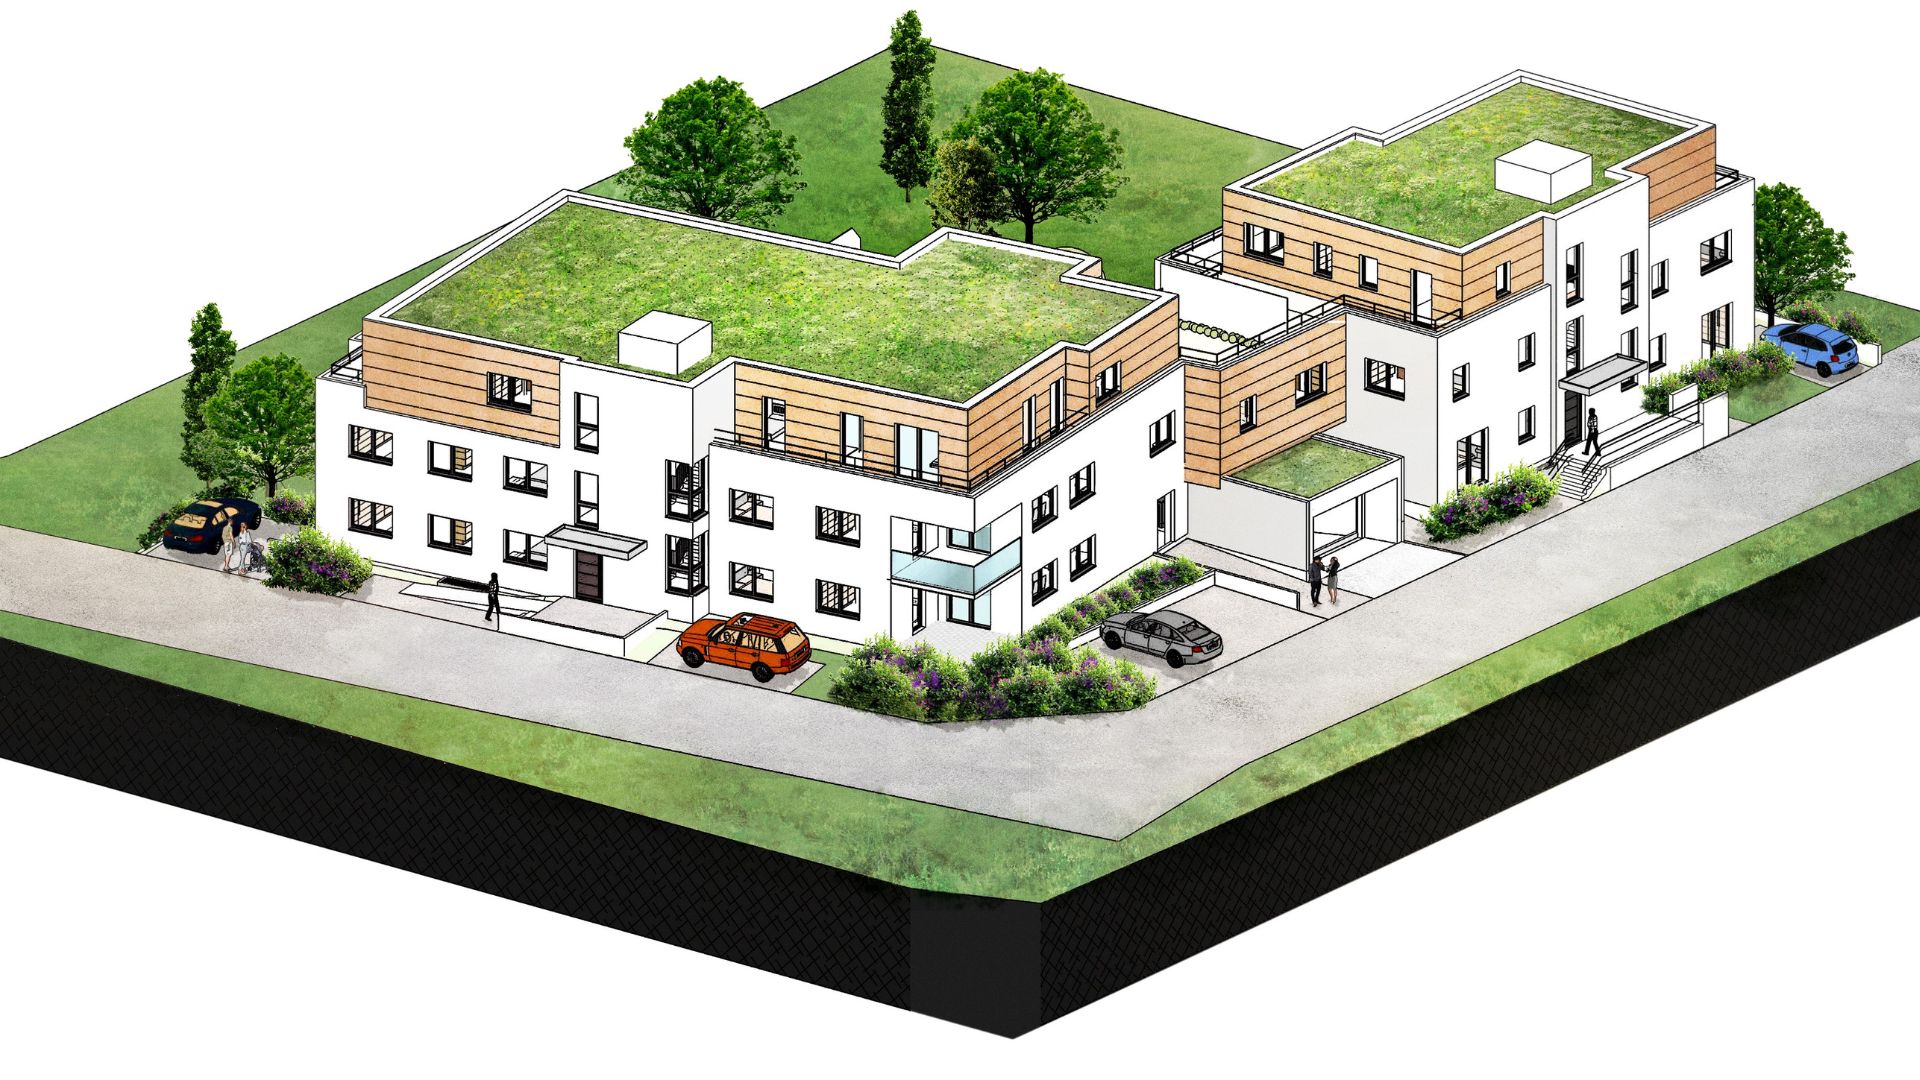 Projekt in Planung: Mehrfamilienhaus "Alte Gärtnerei" in Nagold